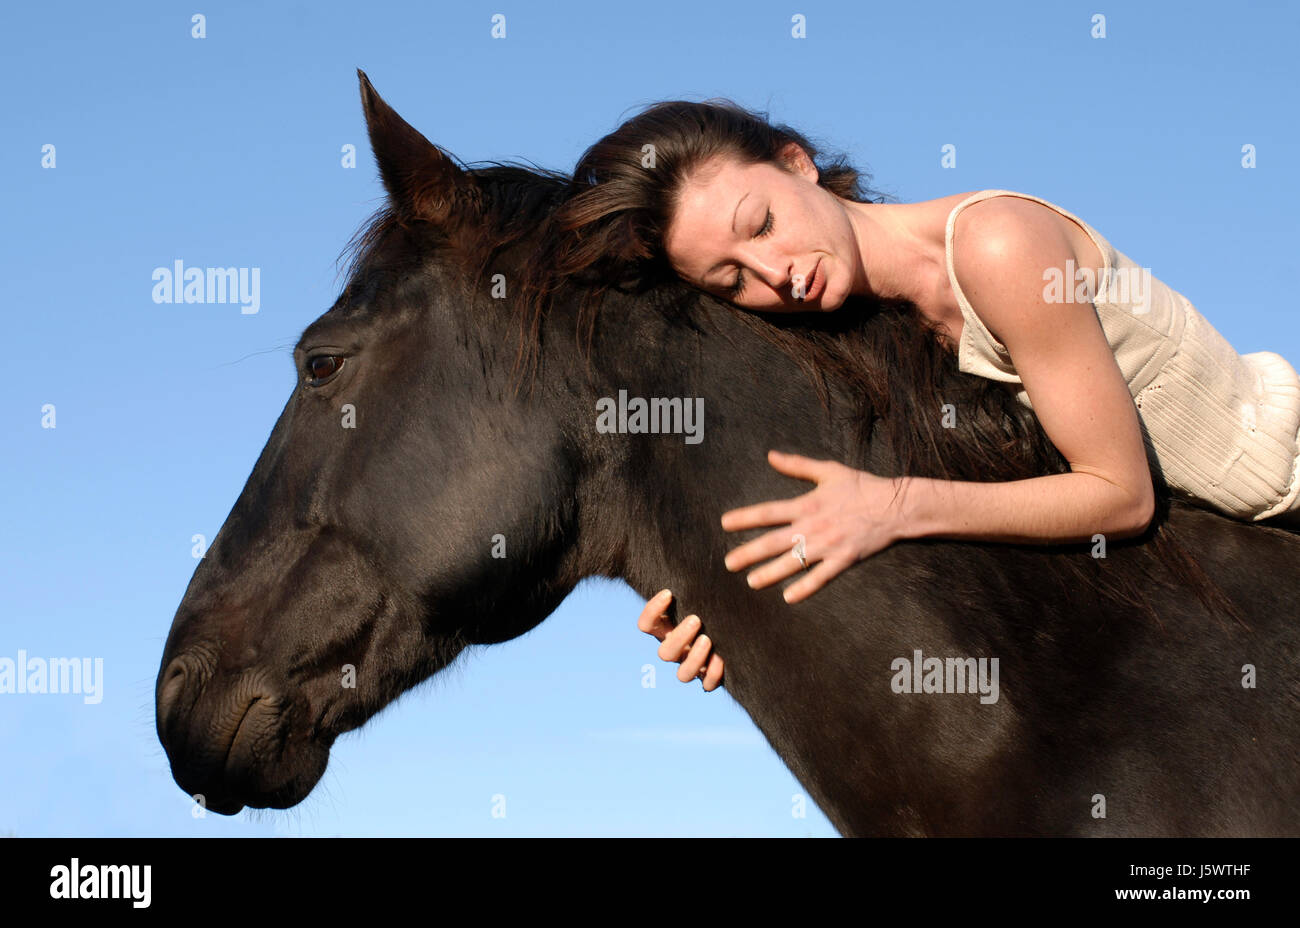 woman horse animal black swarthy jetblack deep black stallion riding girl girls Stock Photo